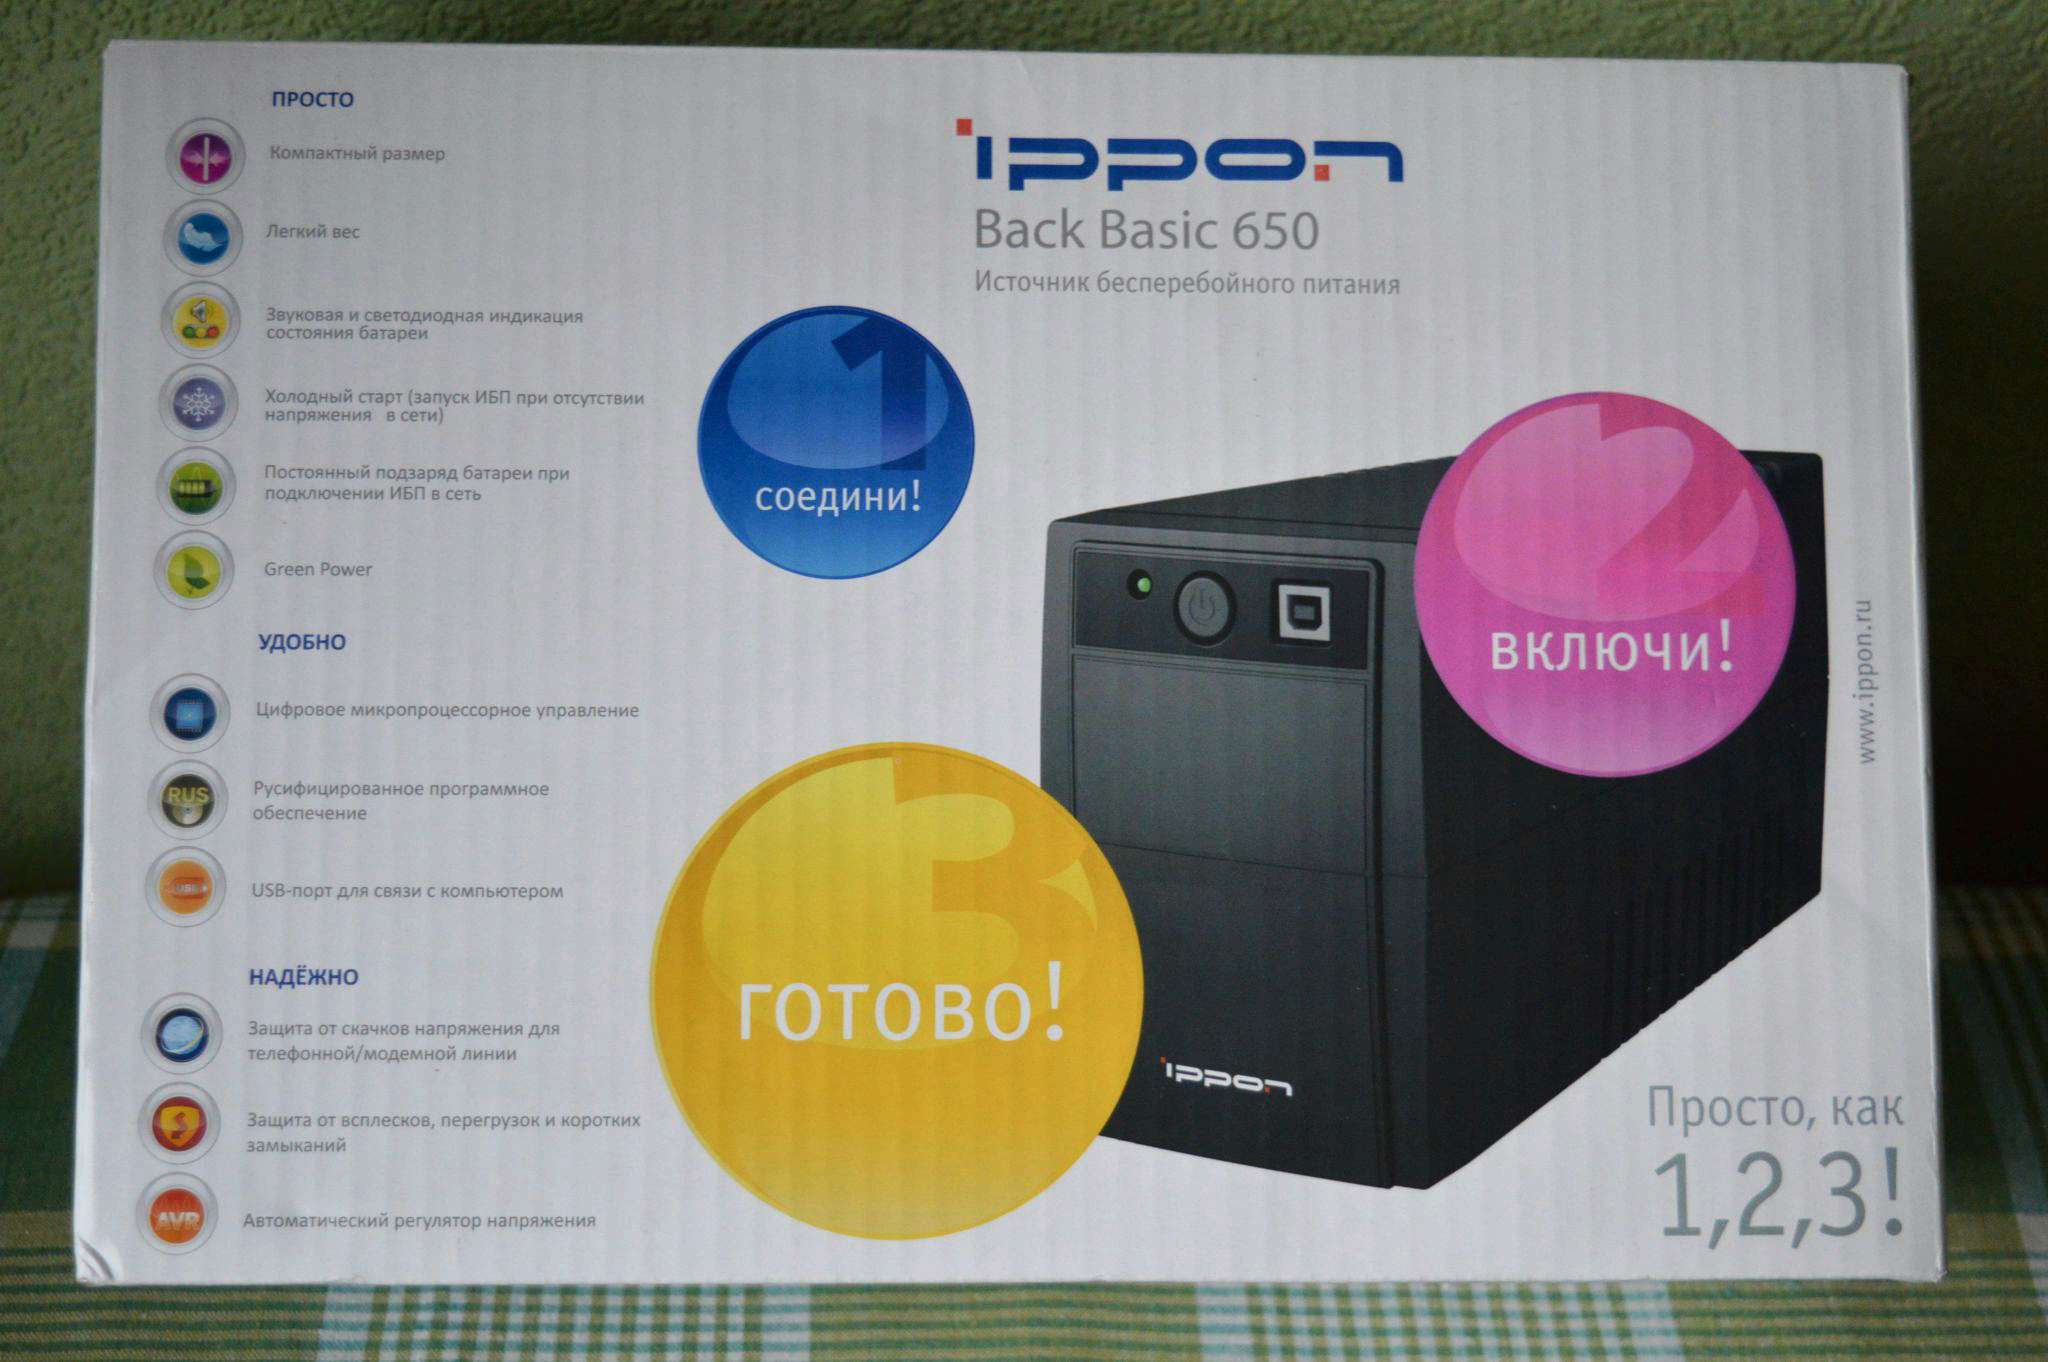 ИБП Ippon back Basic 850. ИБП Ippon 650. Ippon back Basic 650. Источник бесперебойного питания back Basic 650. Back basic 850 euro